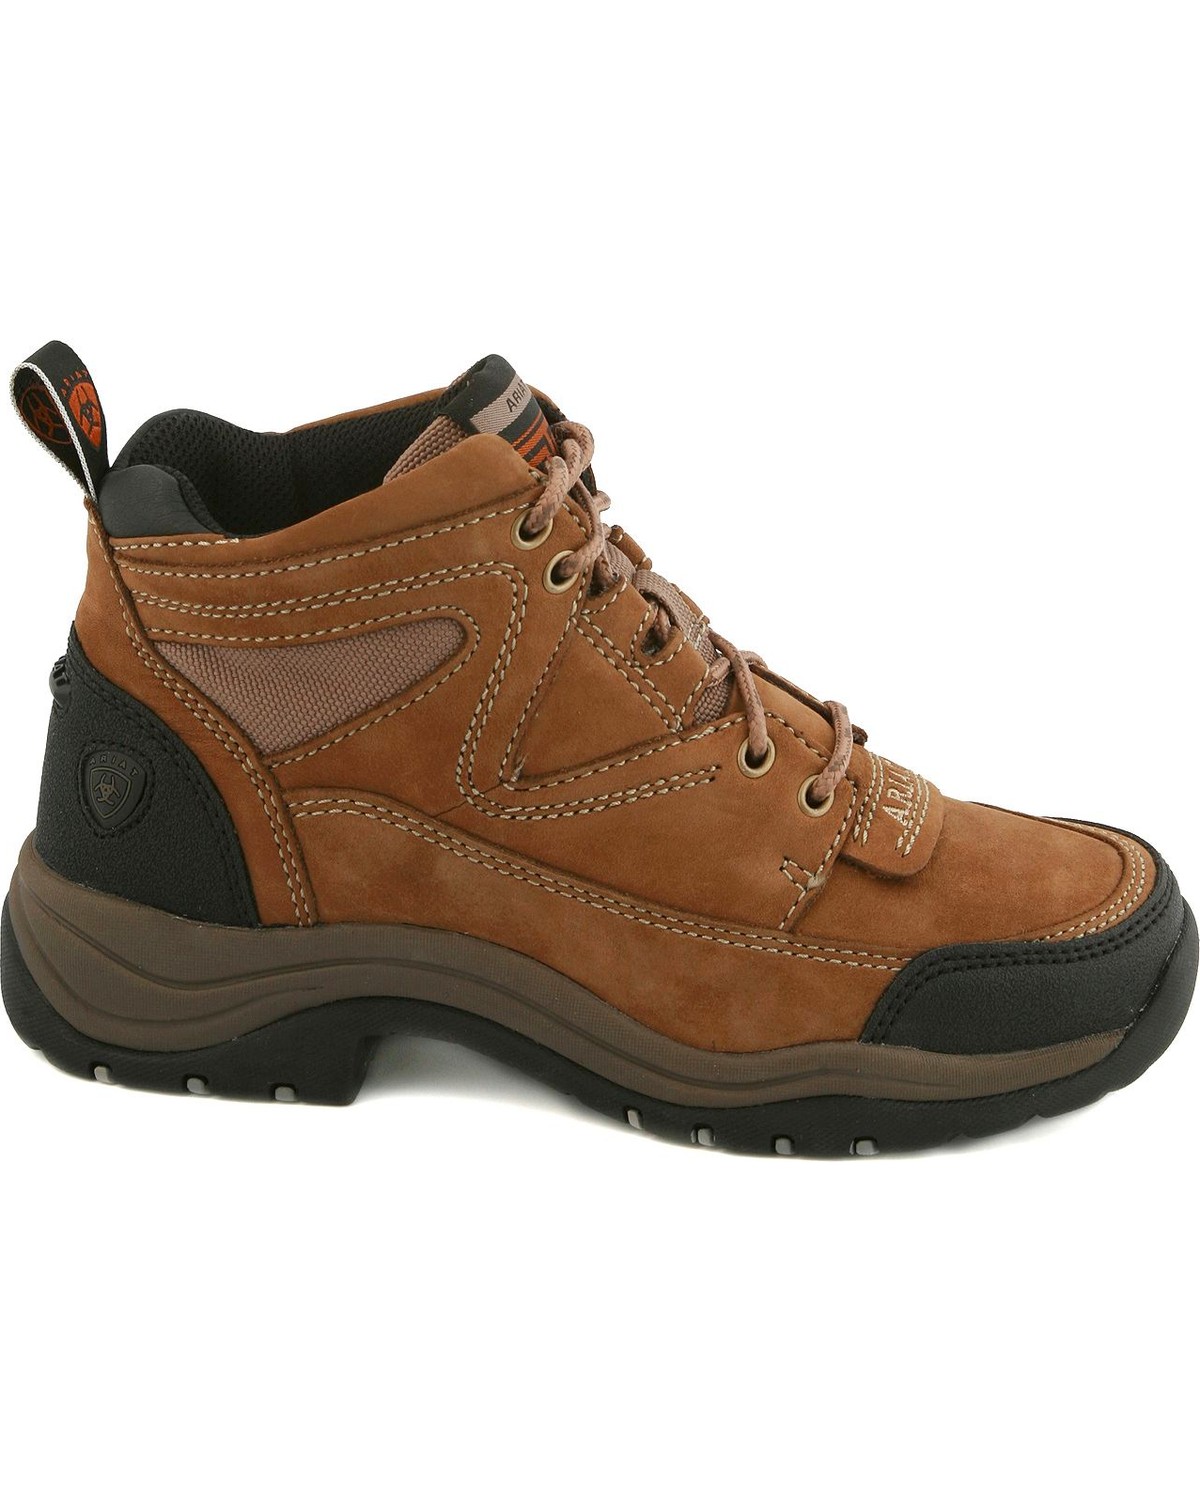 Ariat Women's Terrain Hiking Boots | Sheplers